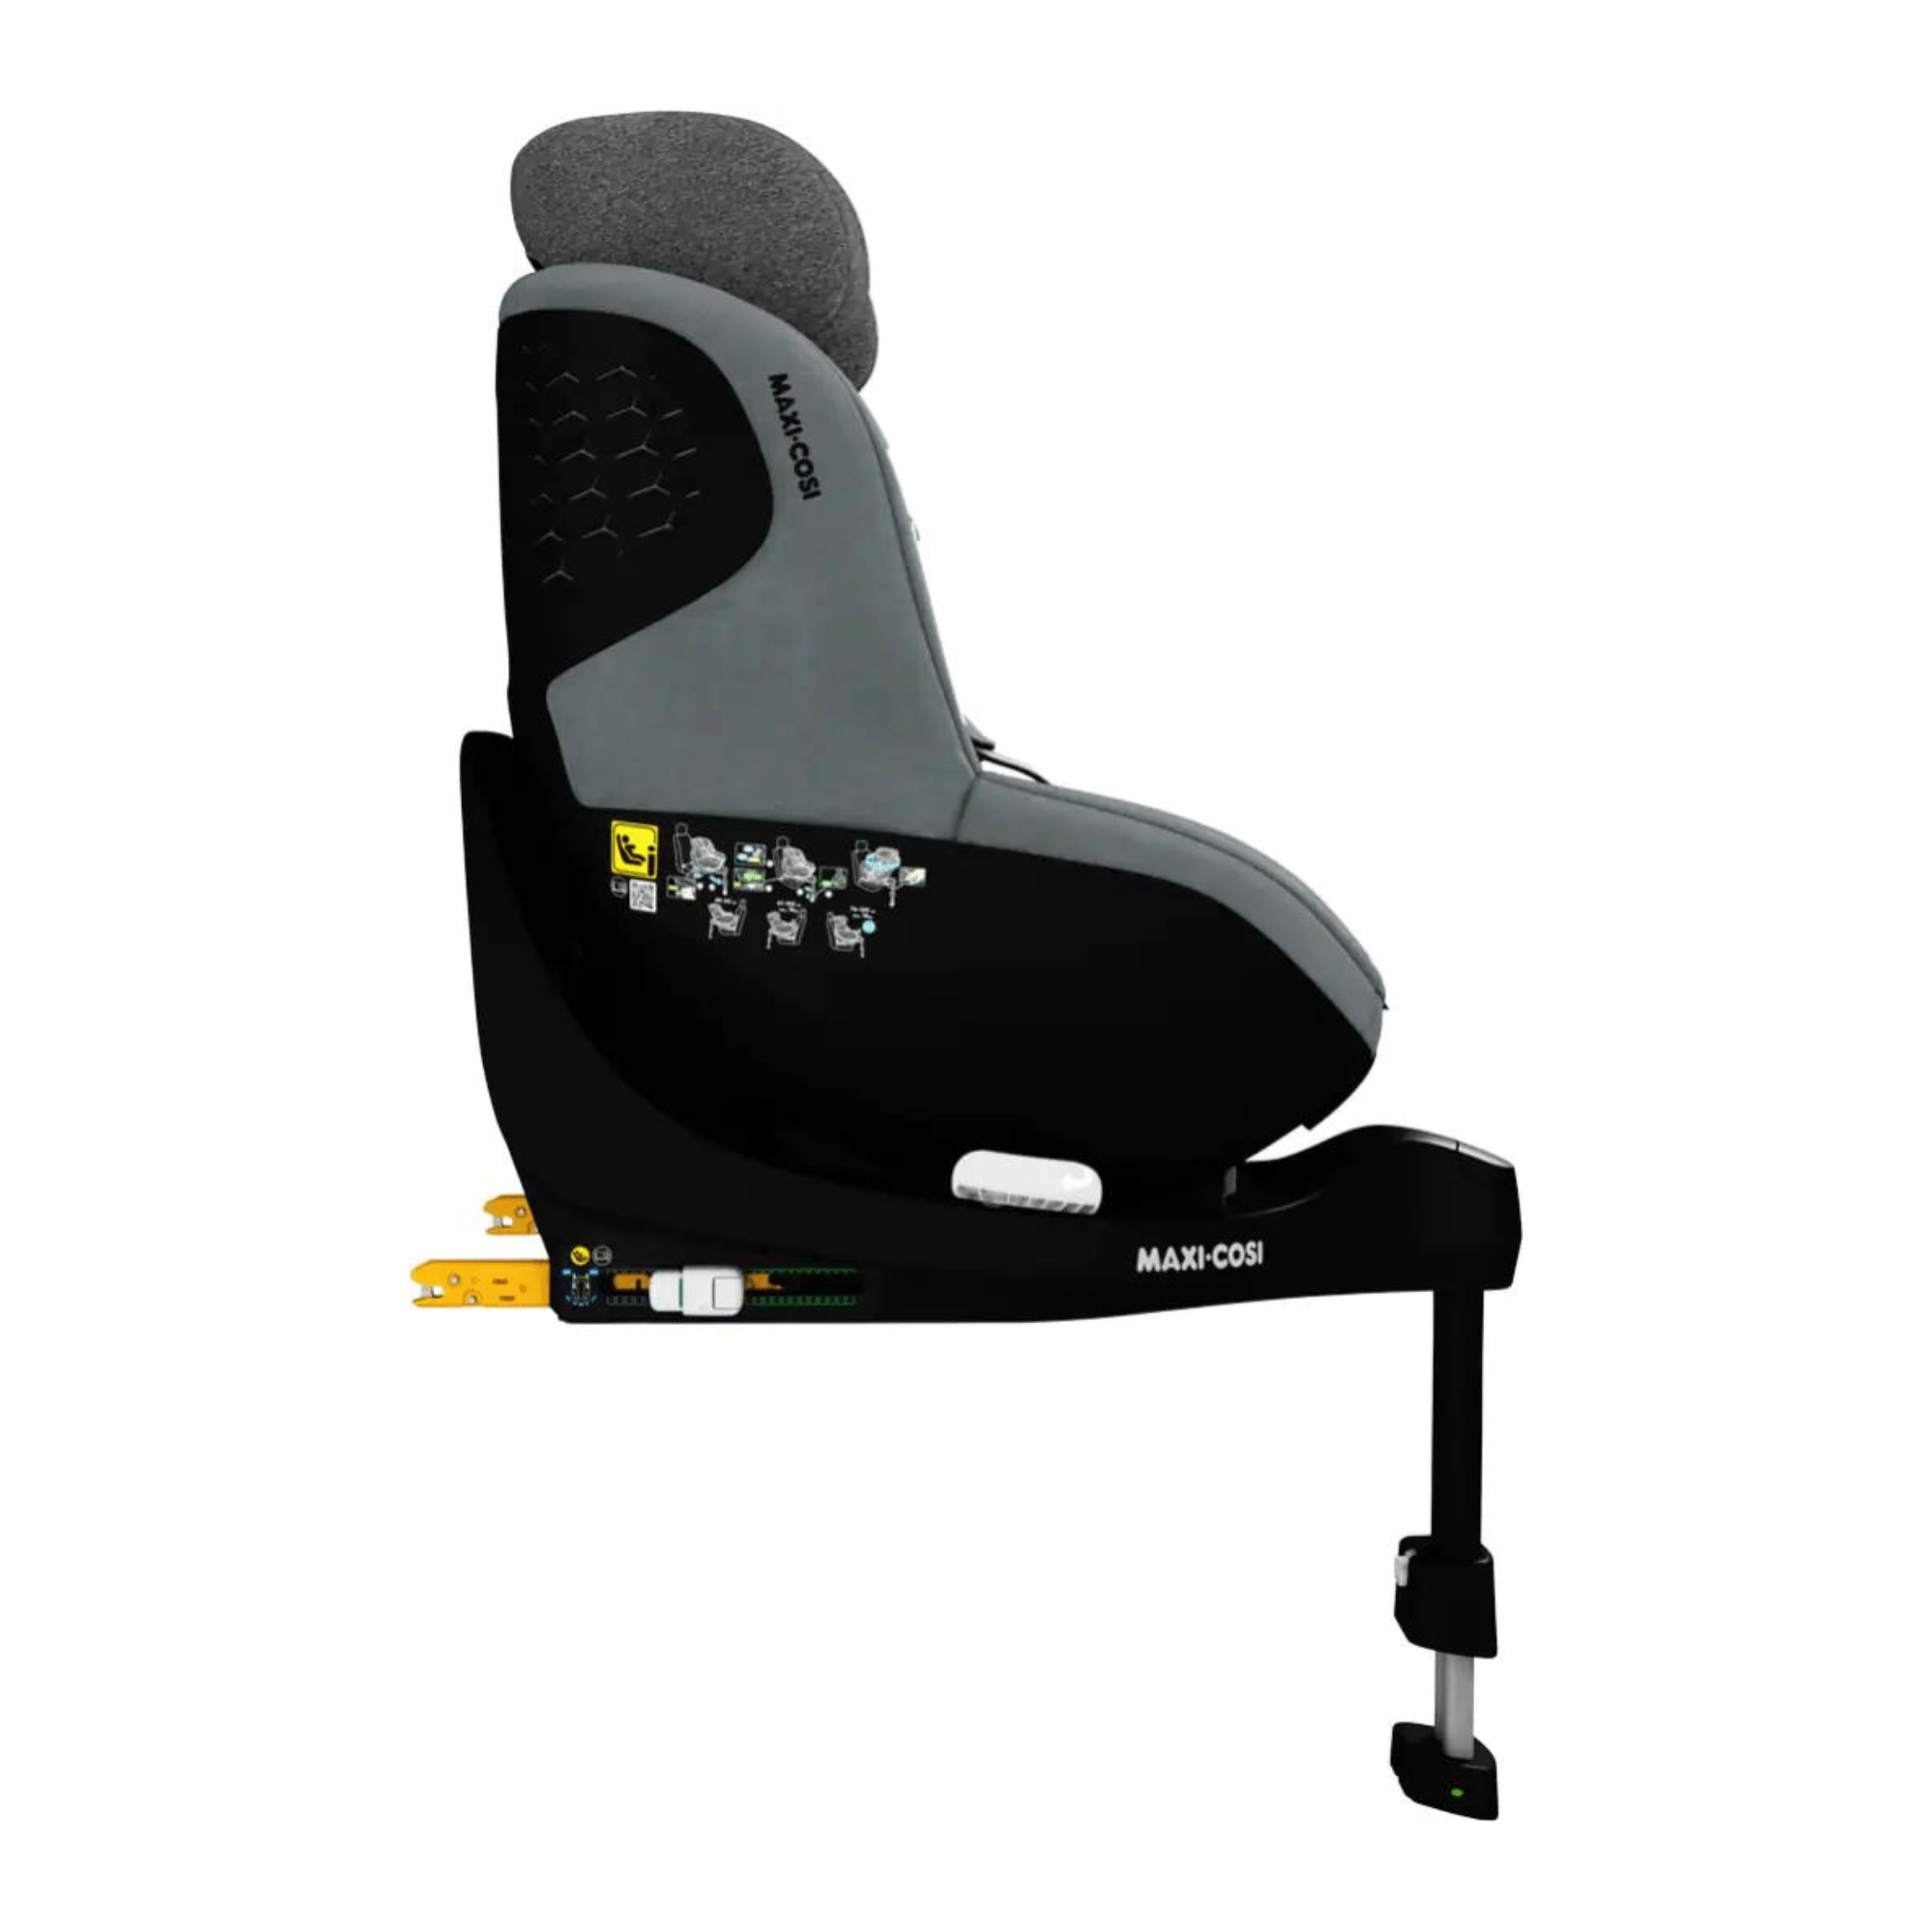 Maxi-Cosi i-Size car seats Maxi-Cosi Mica Pro Eco i-Size in Authentic Grey 8515510110